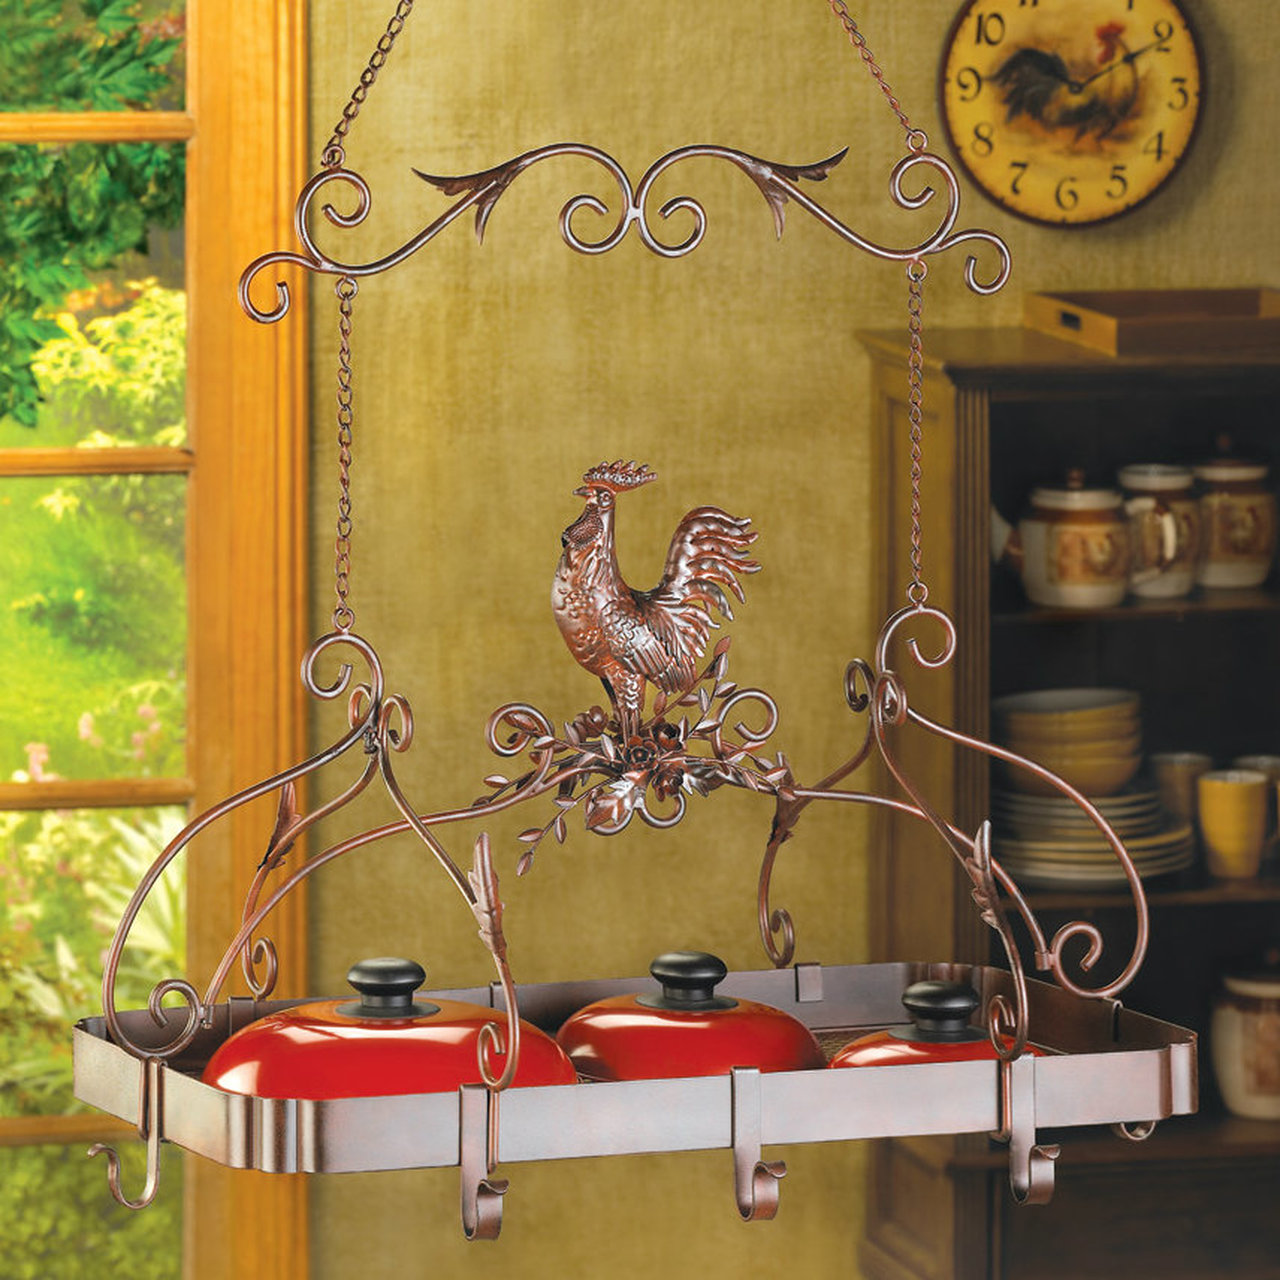 Rooster Iron Overhead Kitchen Rack